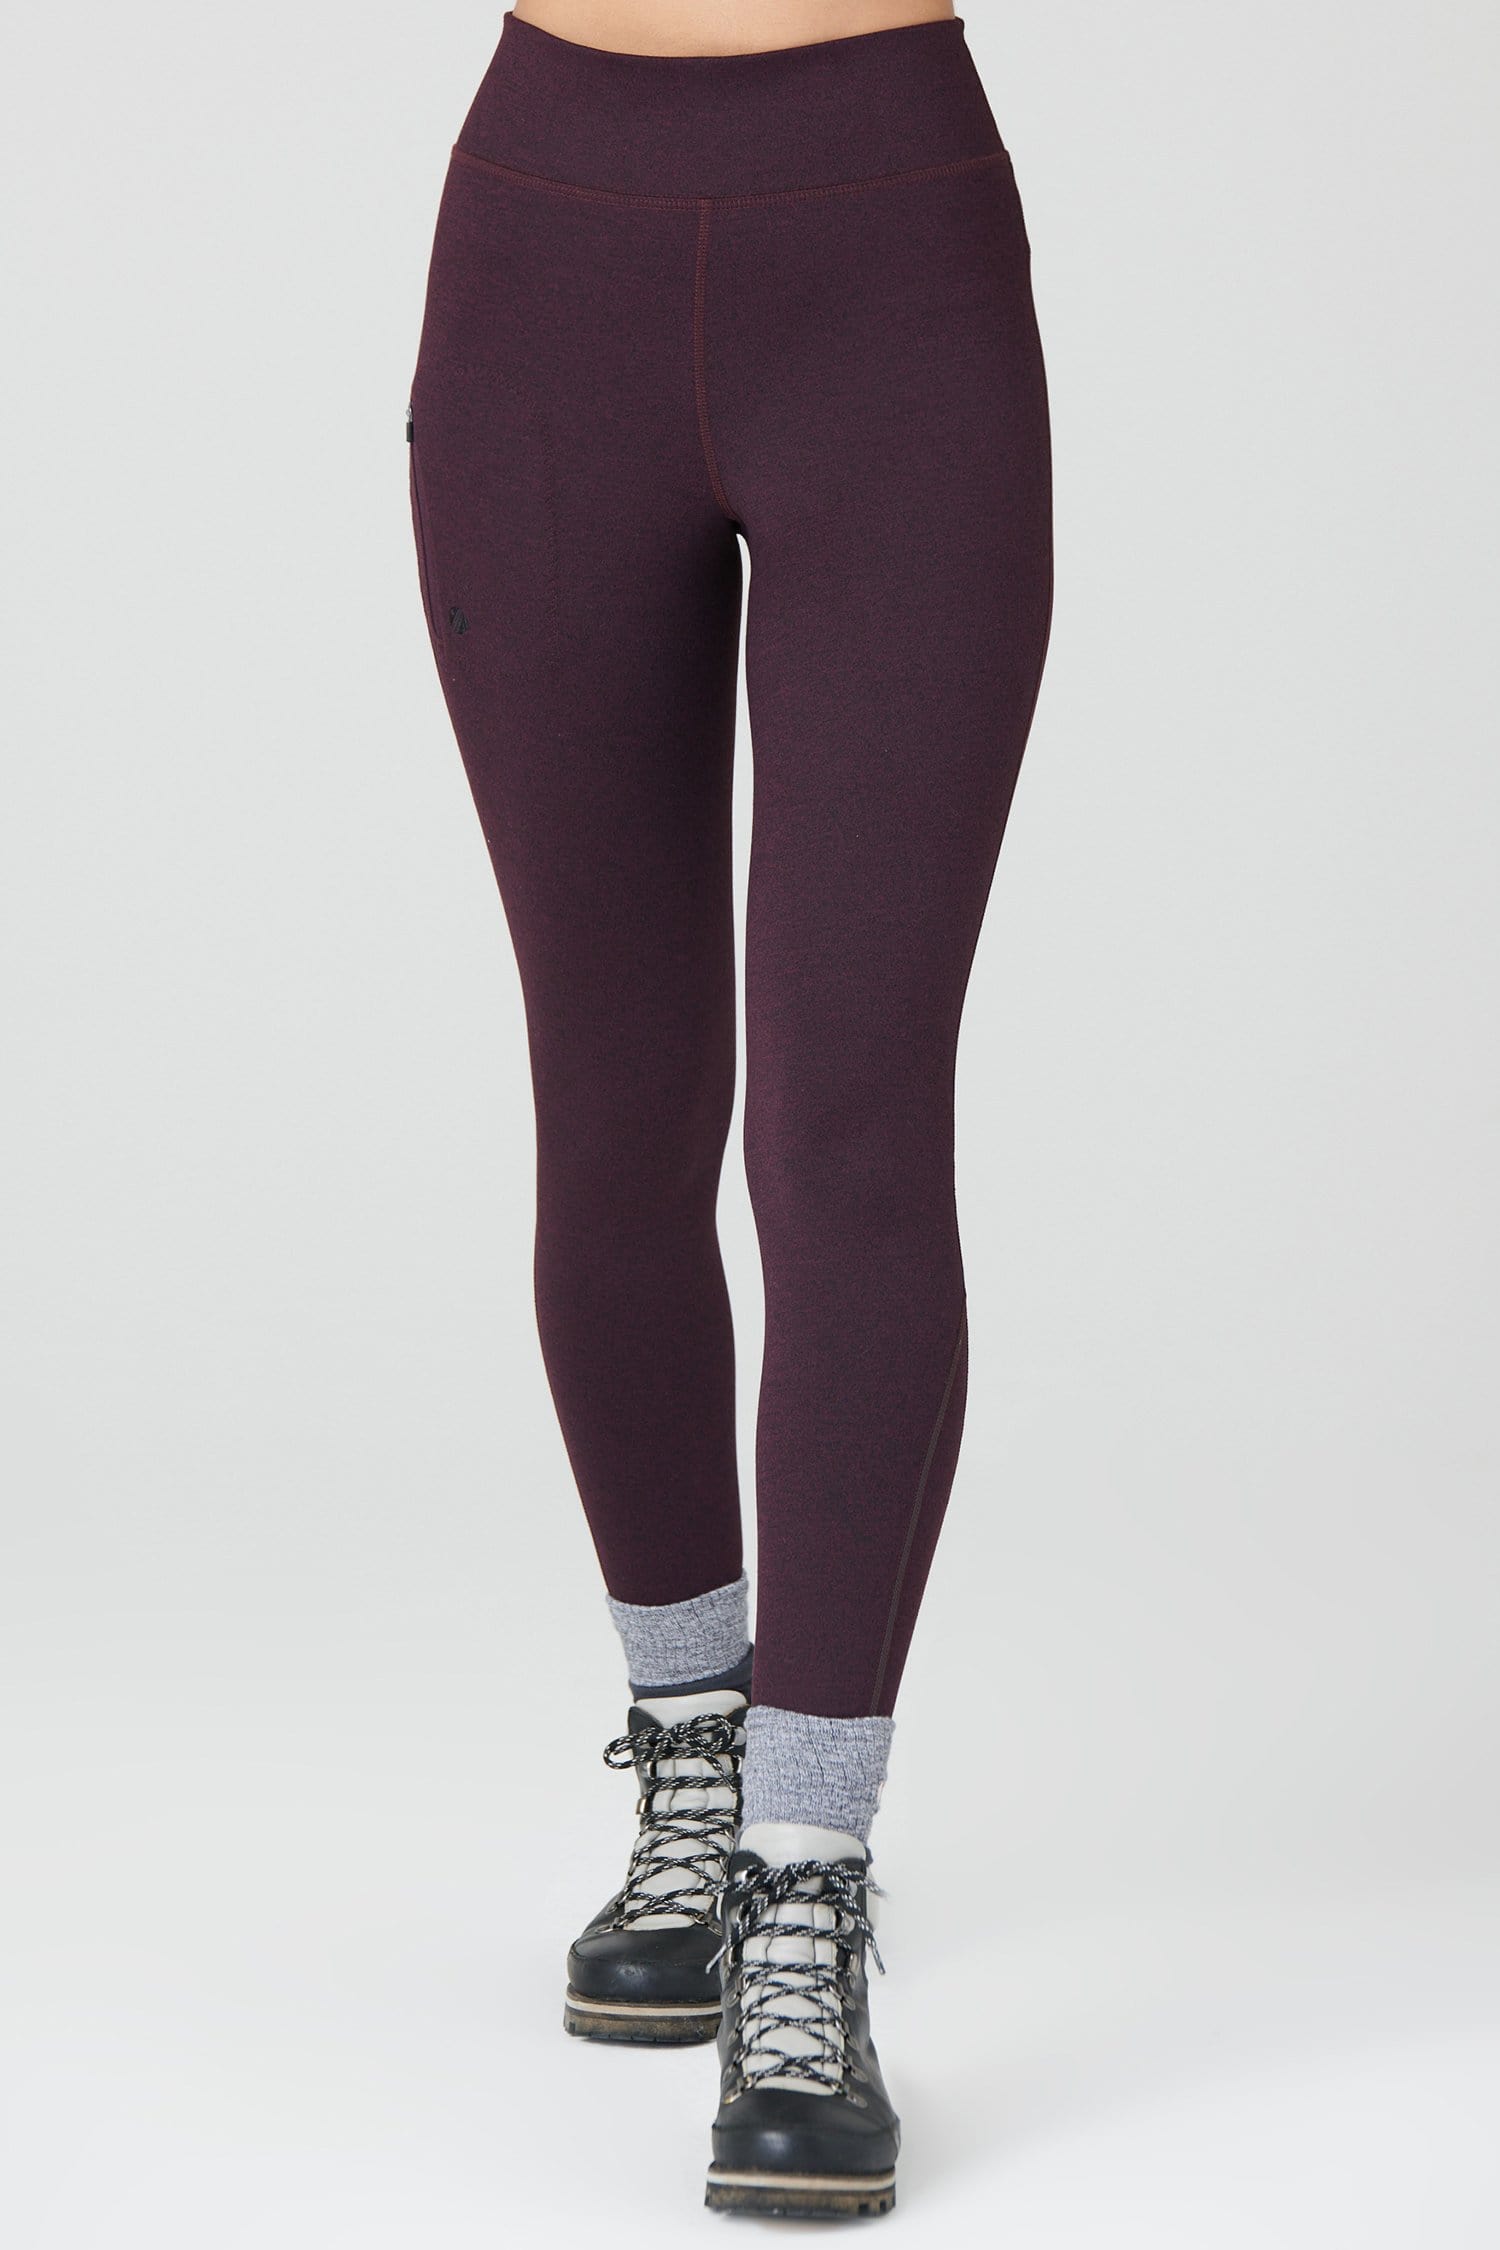 Women Gym Leggings Seamless High Waist with Phone Pocket - Aubergine Purple